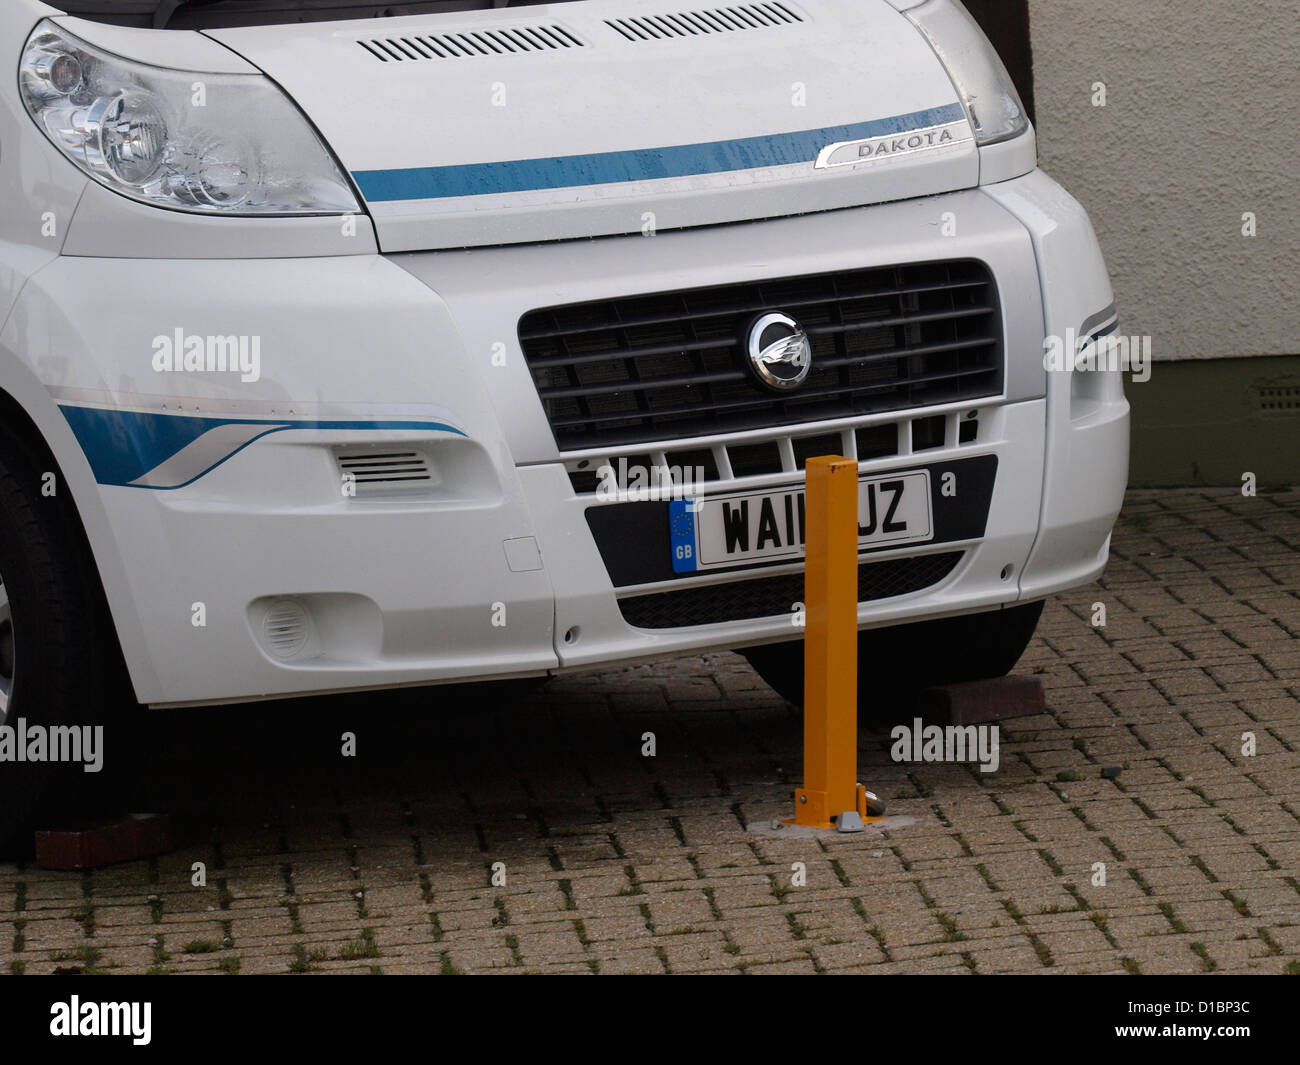 Driveway security parking post, UK Stock Photo